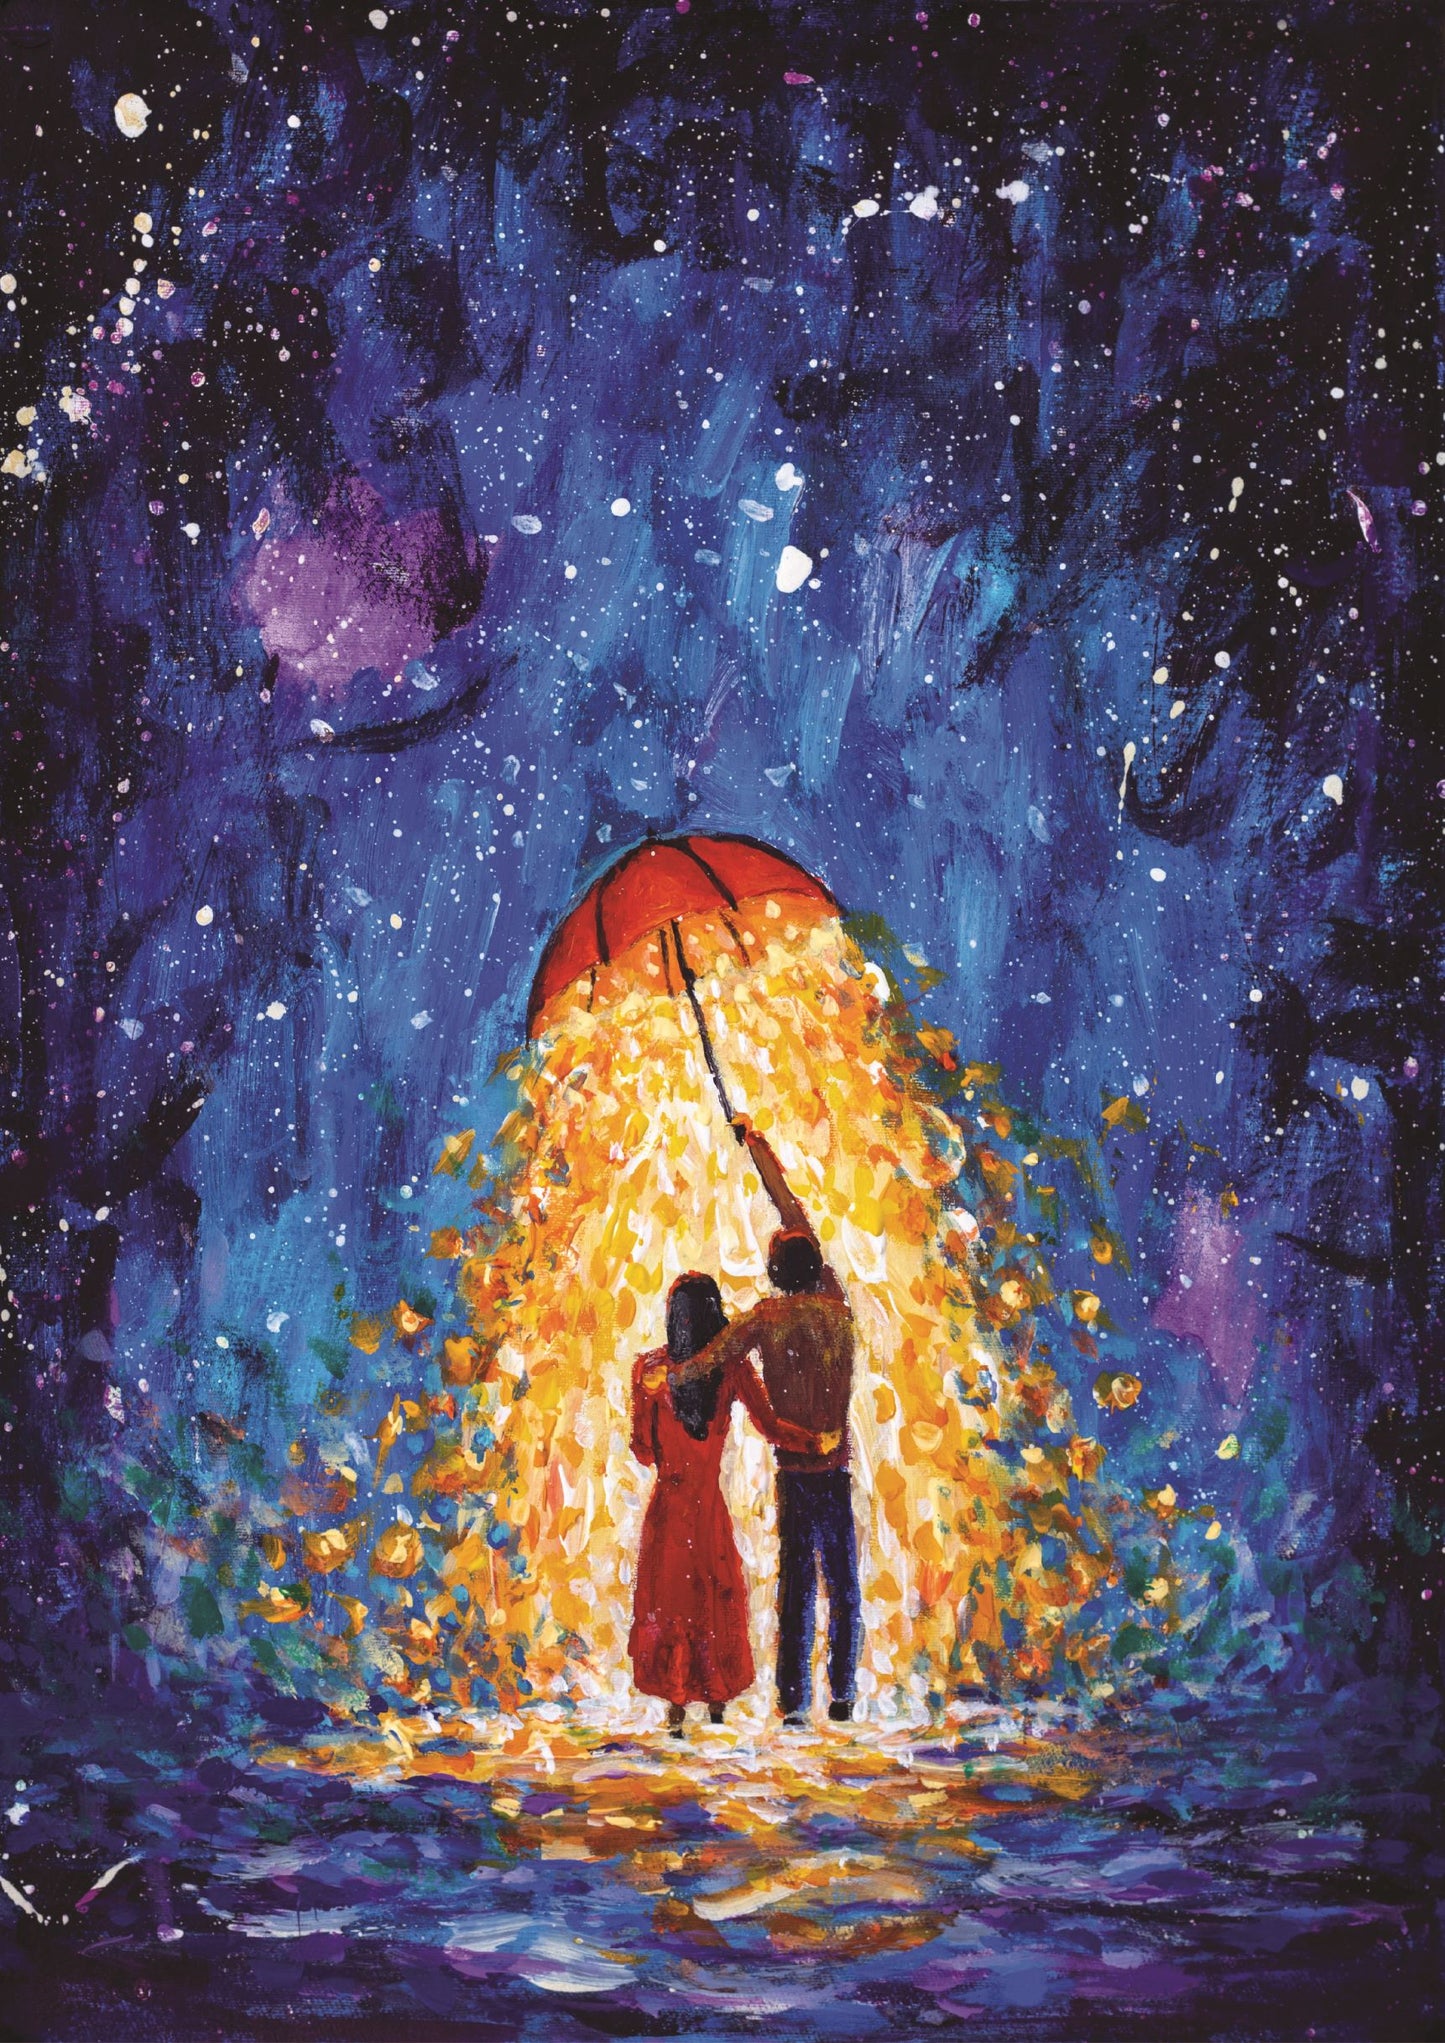 Couple in love walks under glowing umbrella in winter starry night